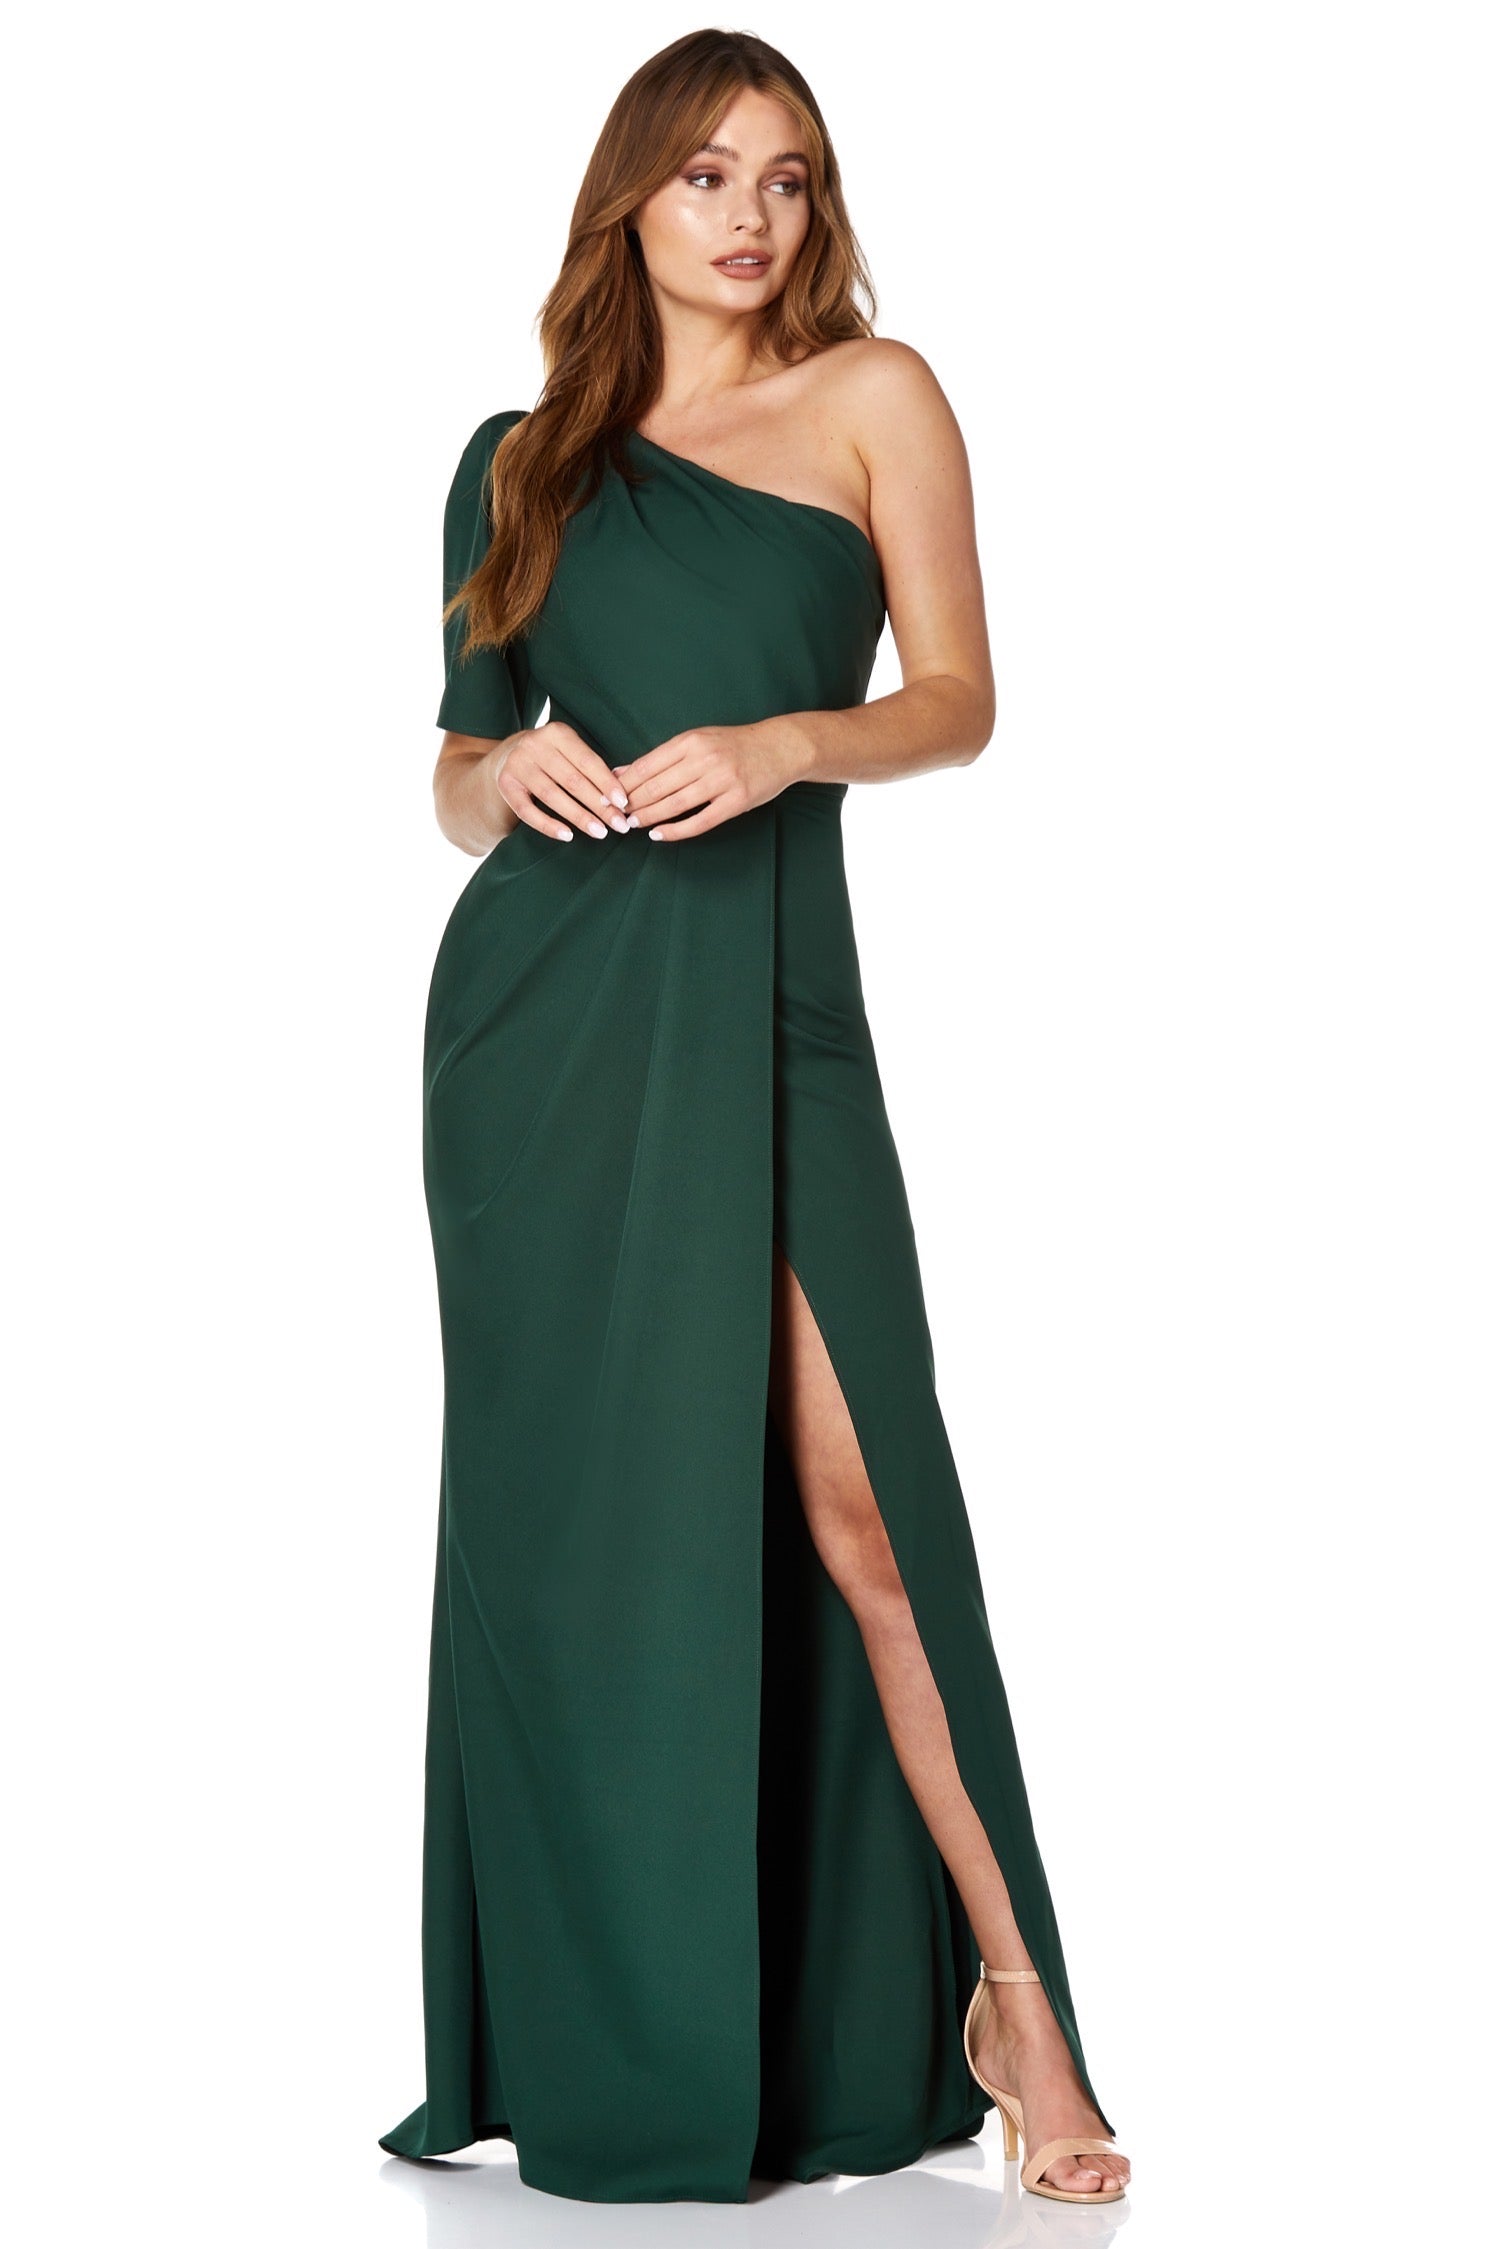 Gianna One Shoulder Sleeve Maxi Dress with Thigh Split, UK 8 / US 4 / EU 36 / Dark Green